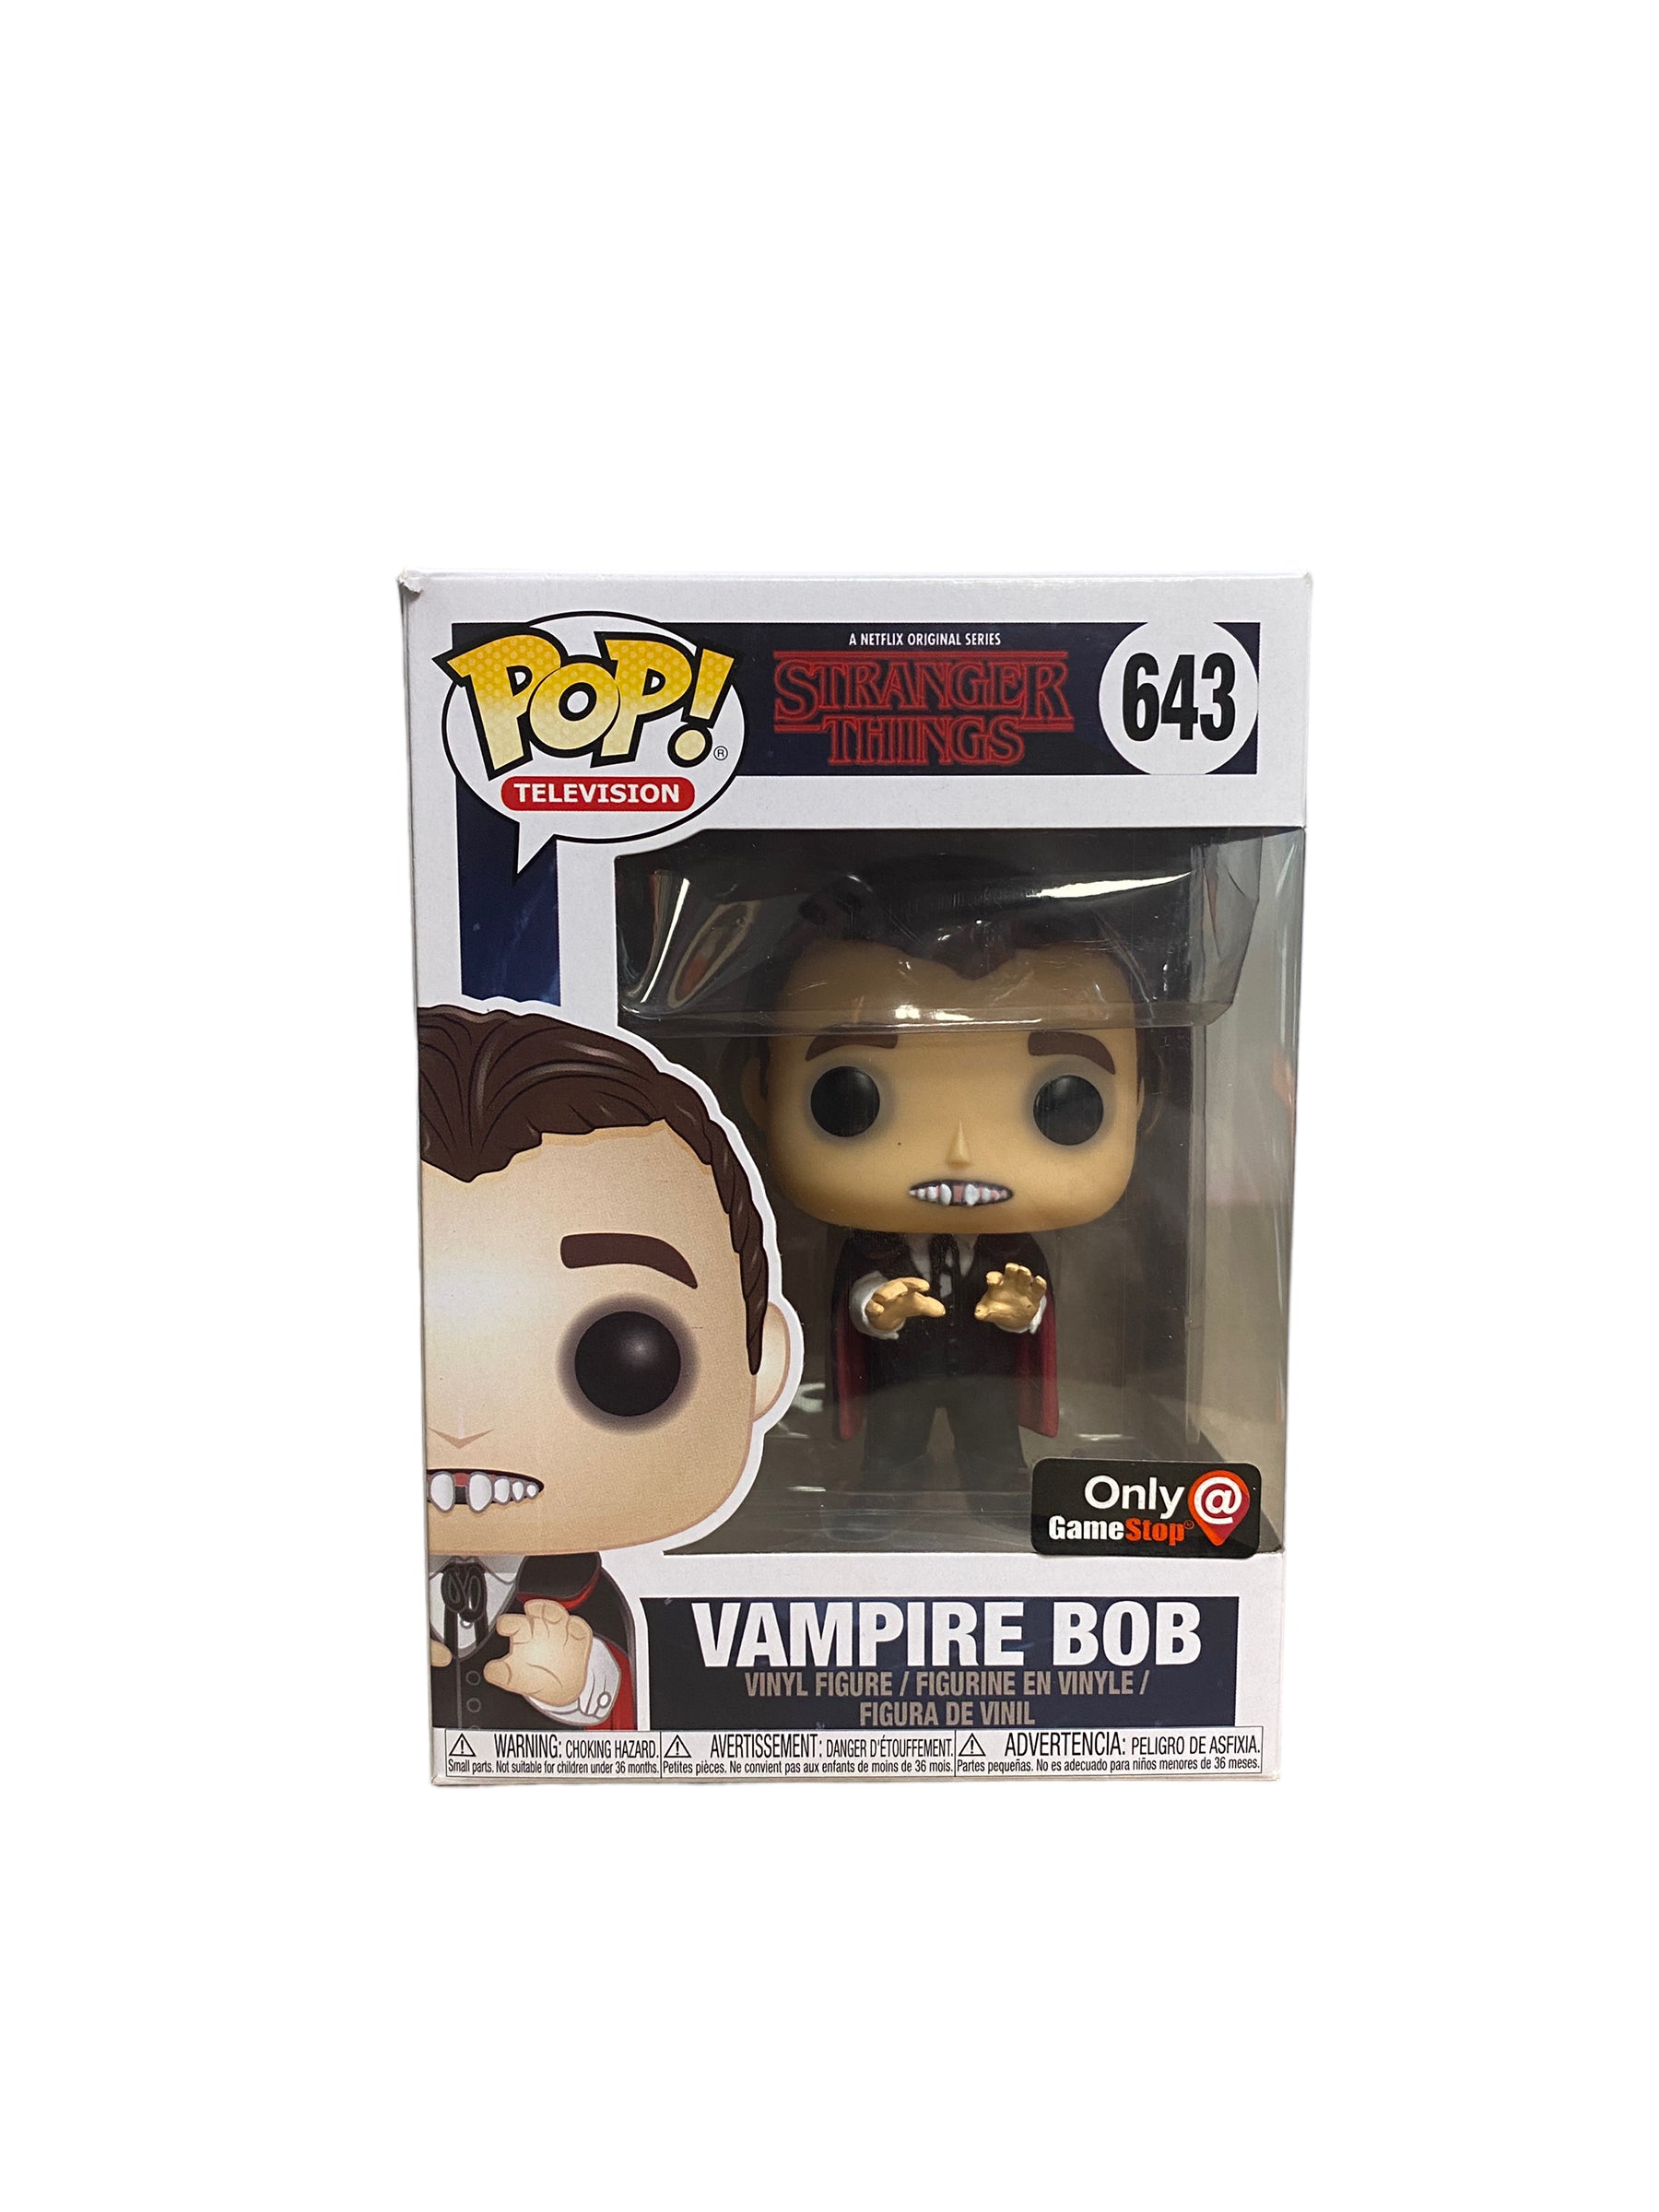 Vampire Bob #643 Funko Pop! - Stranger Things - 2018 Pop! - GameStop Exclusive - Condition 8.25/10